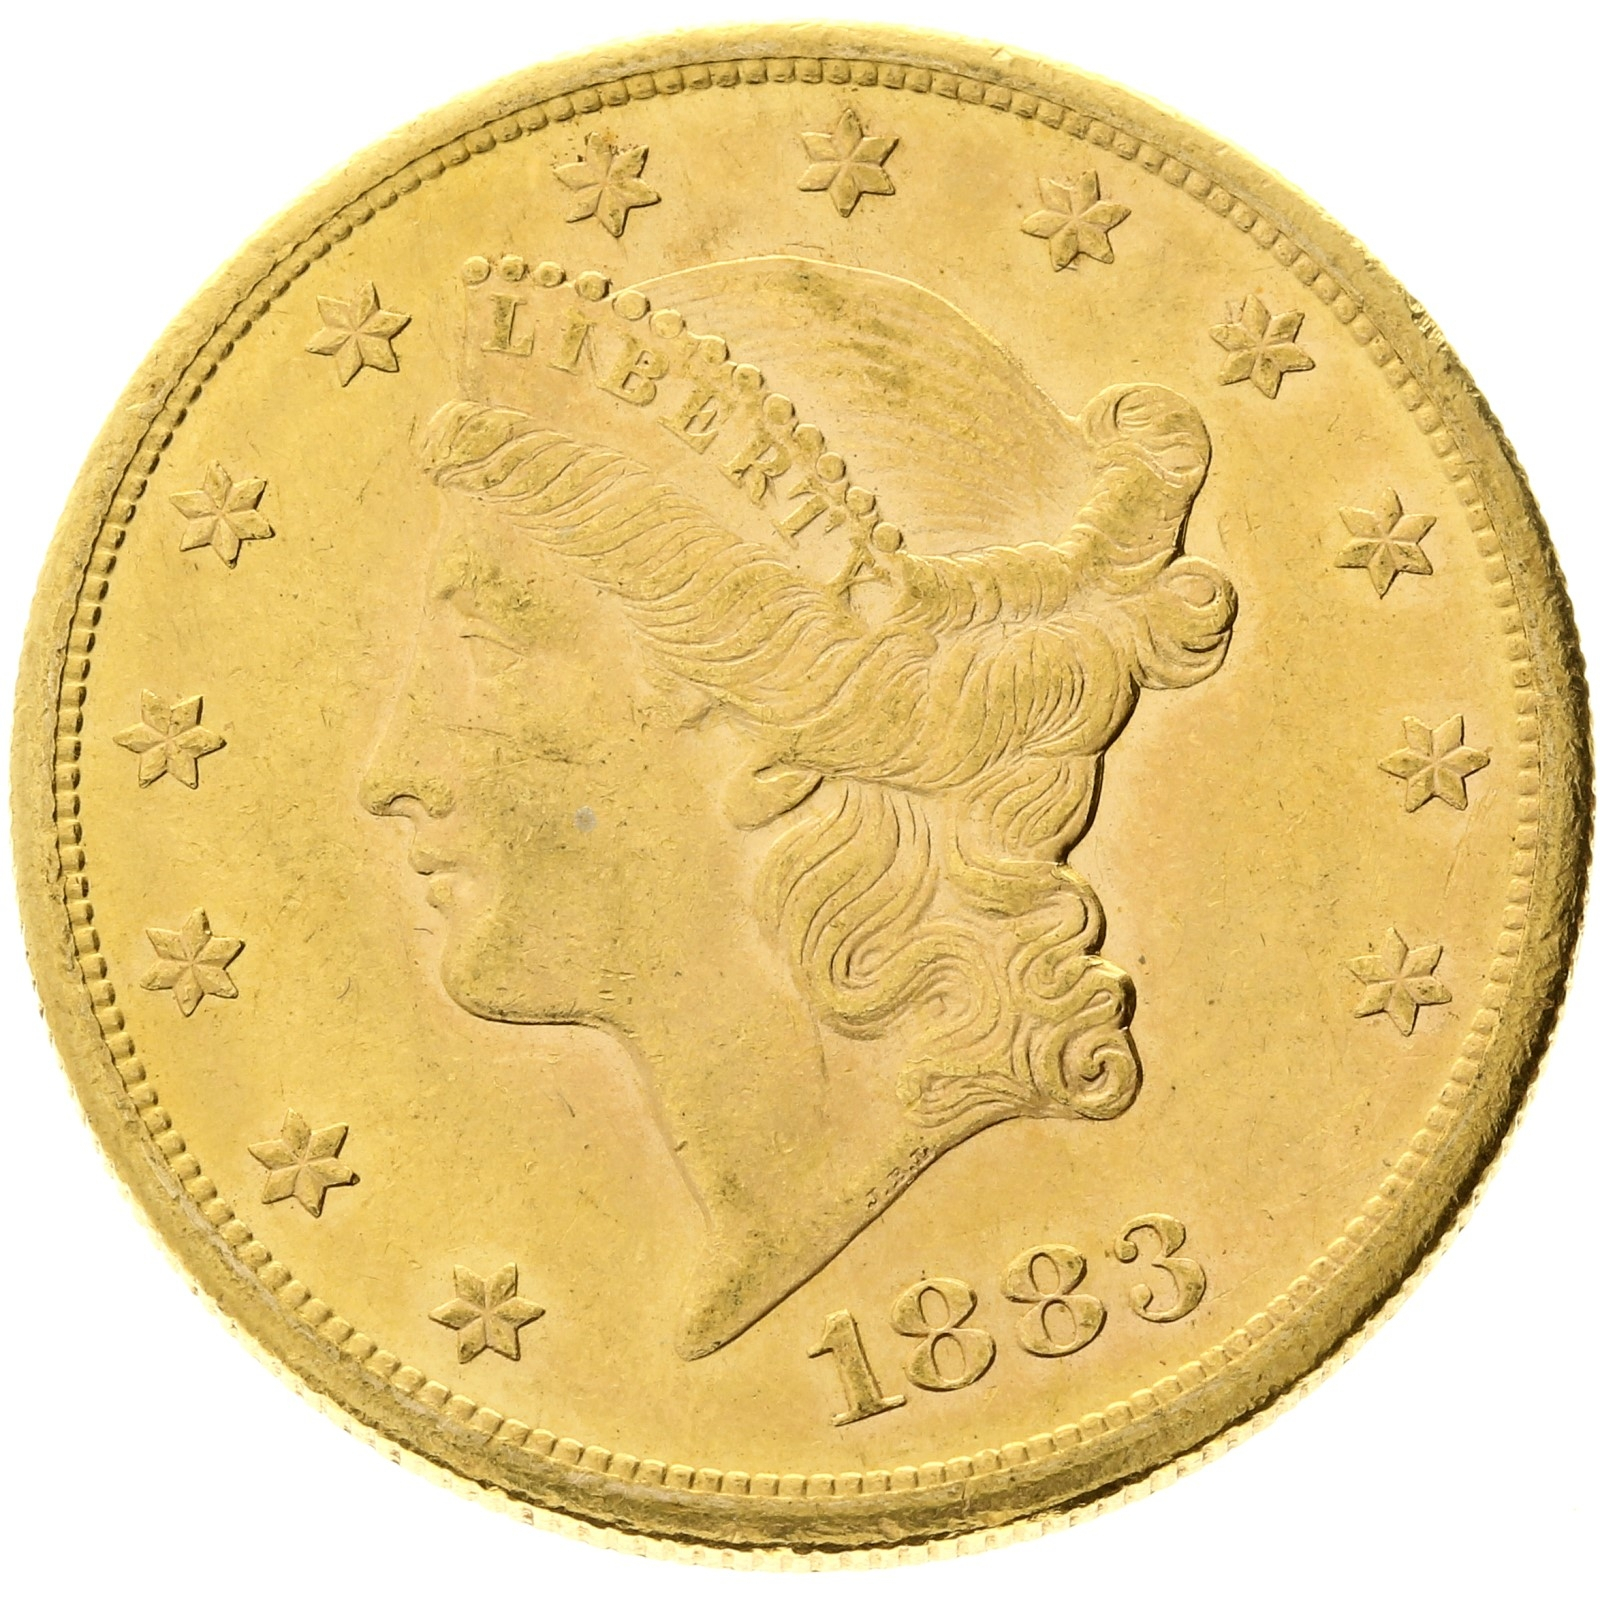 USA - 20 dollars - 1883 - S - Liberty Head